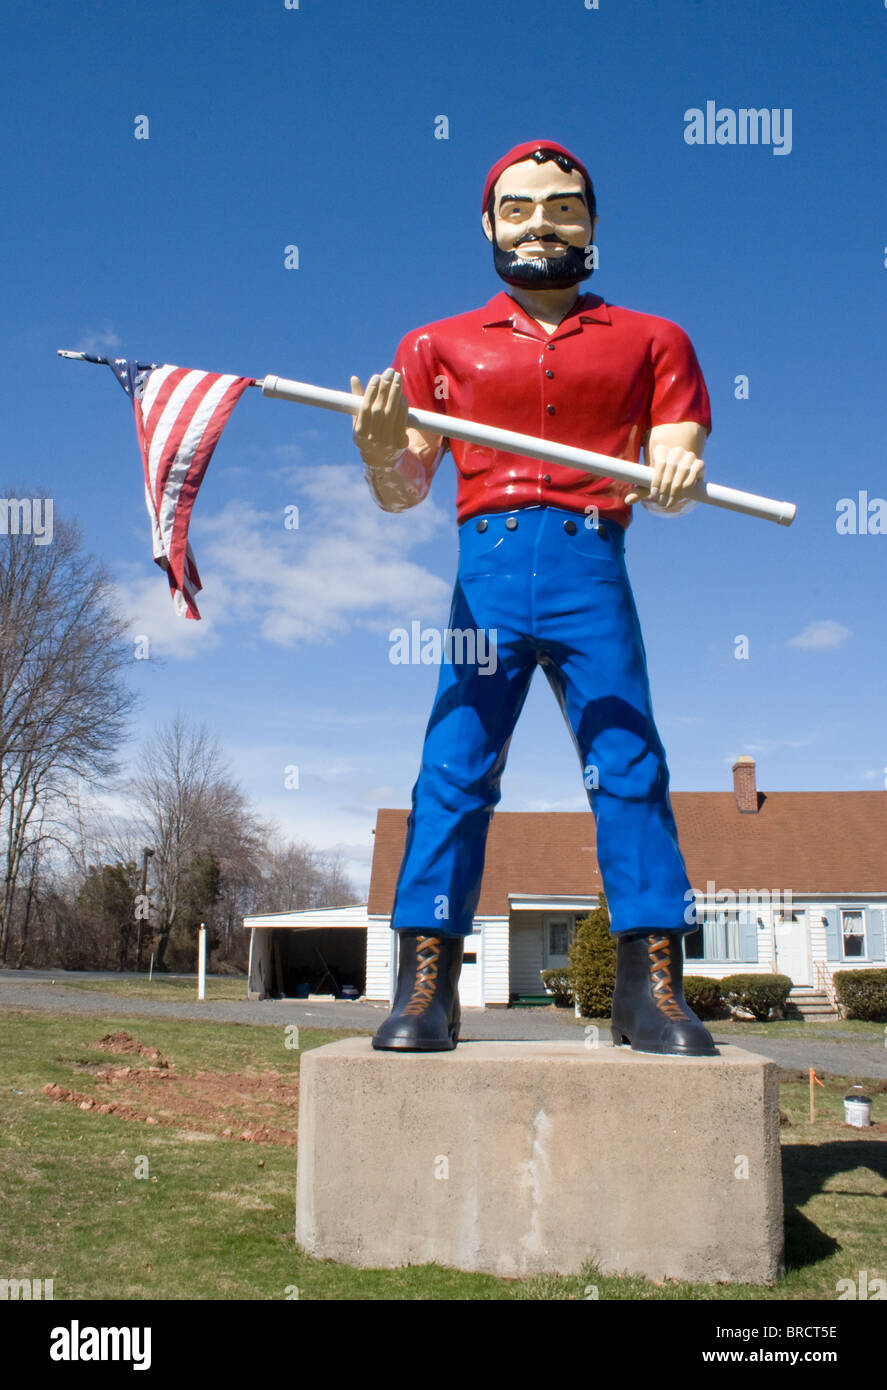 Paul Bunyan Muffler Man holding an American flag in Cheshire Connecticut Stock Photo